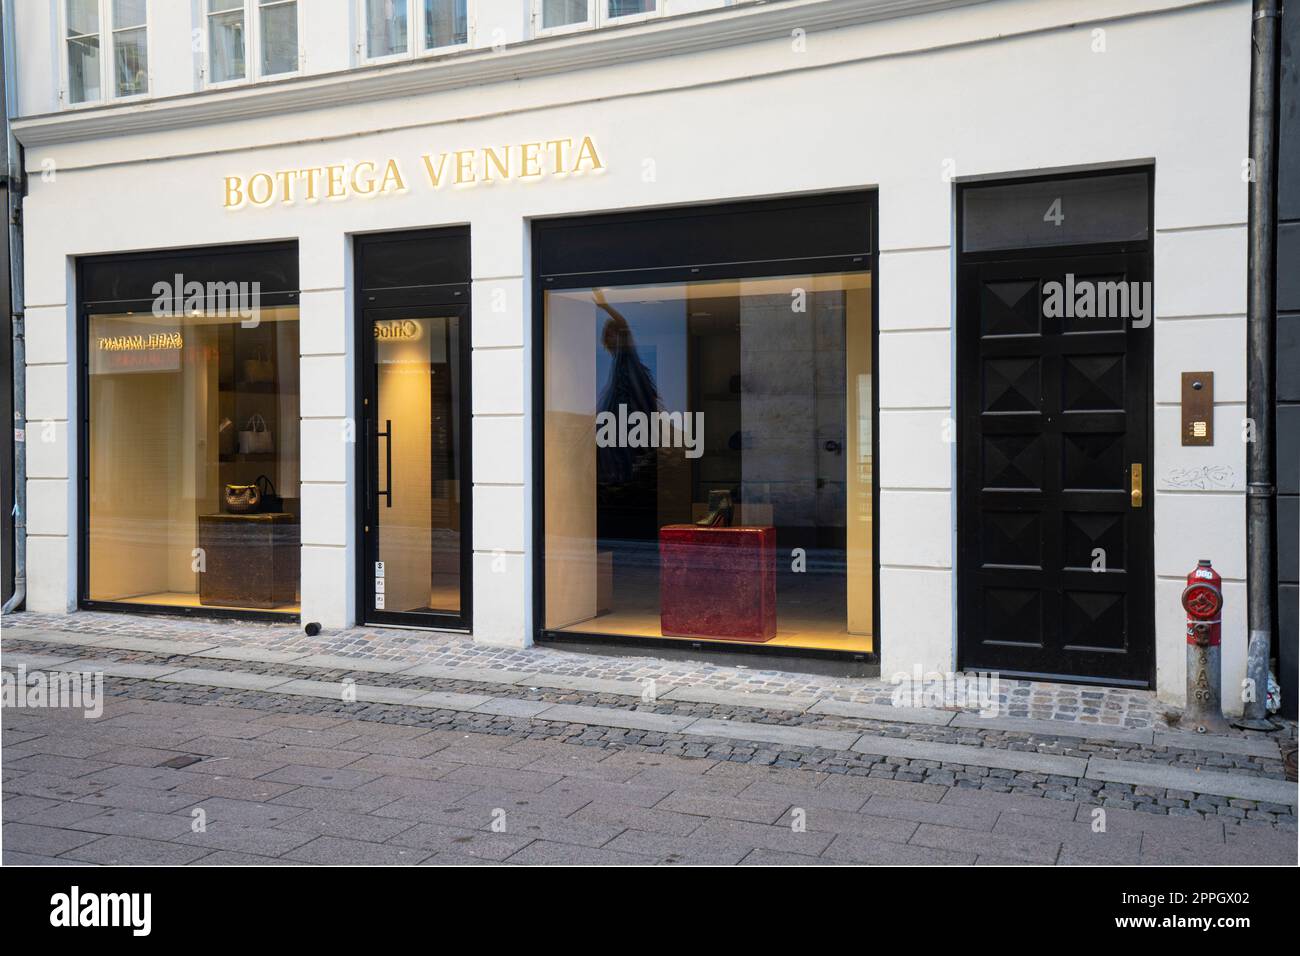 Bottega Veneta brand shop in Copenhagen, Denmark Stock Photo - Alamy